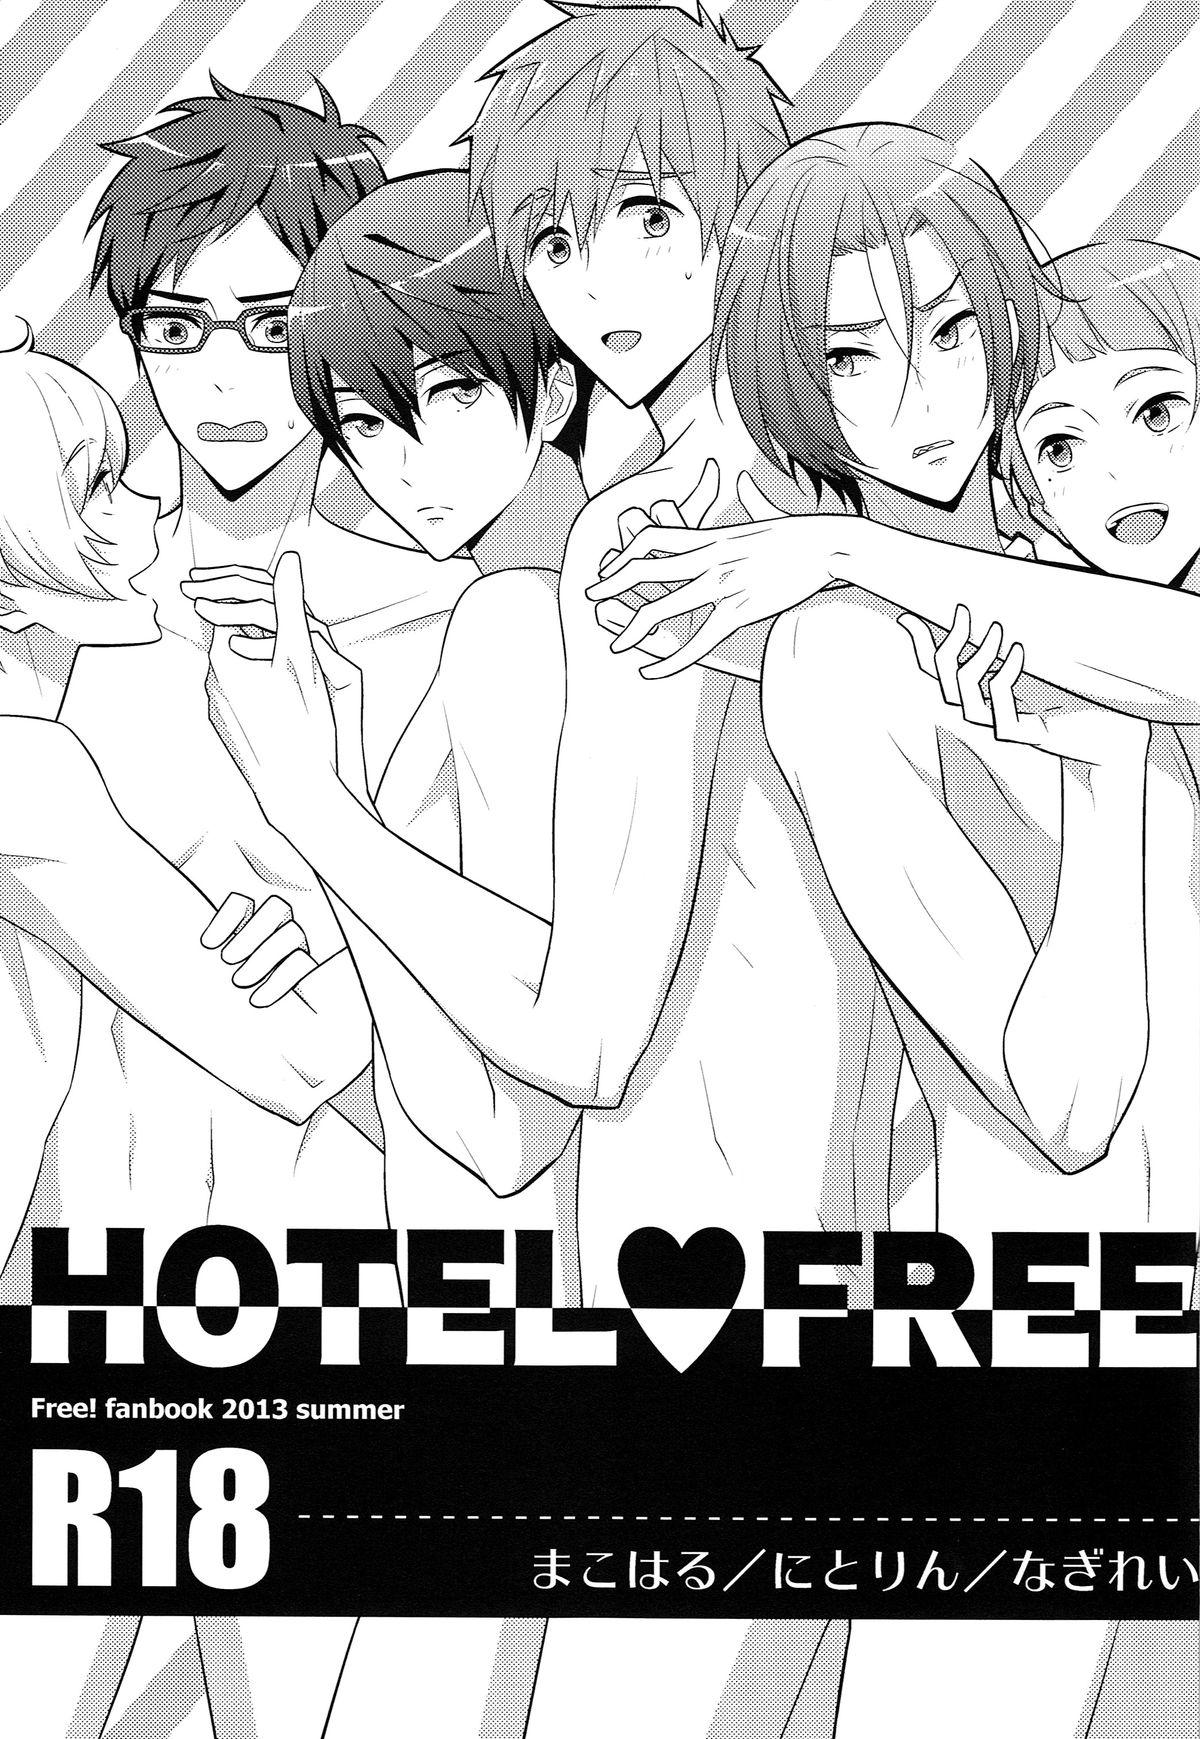 HOTEL FREE 1